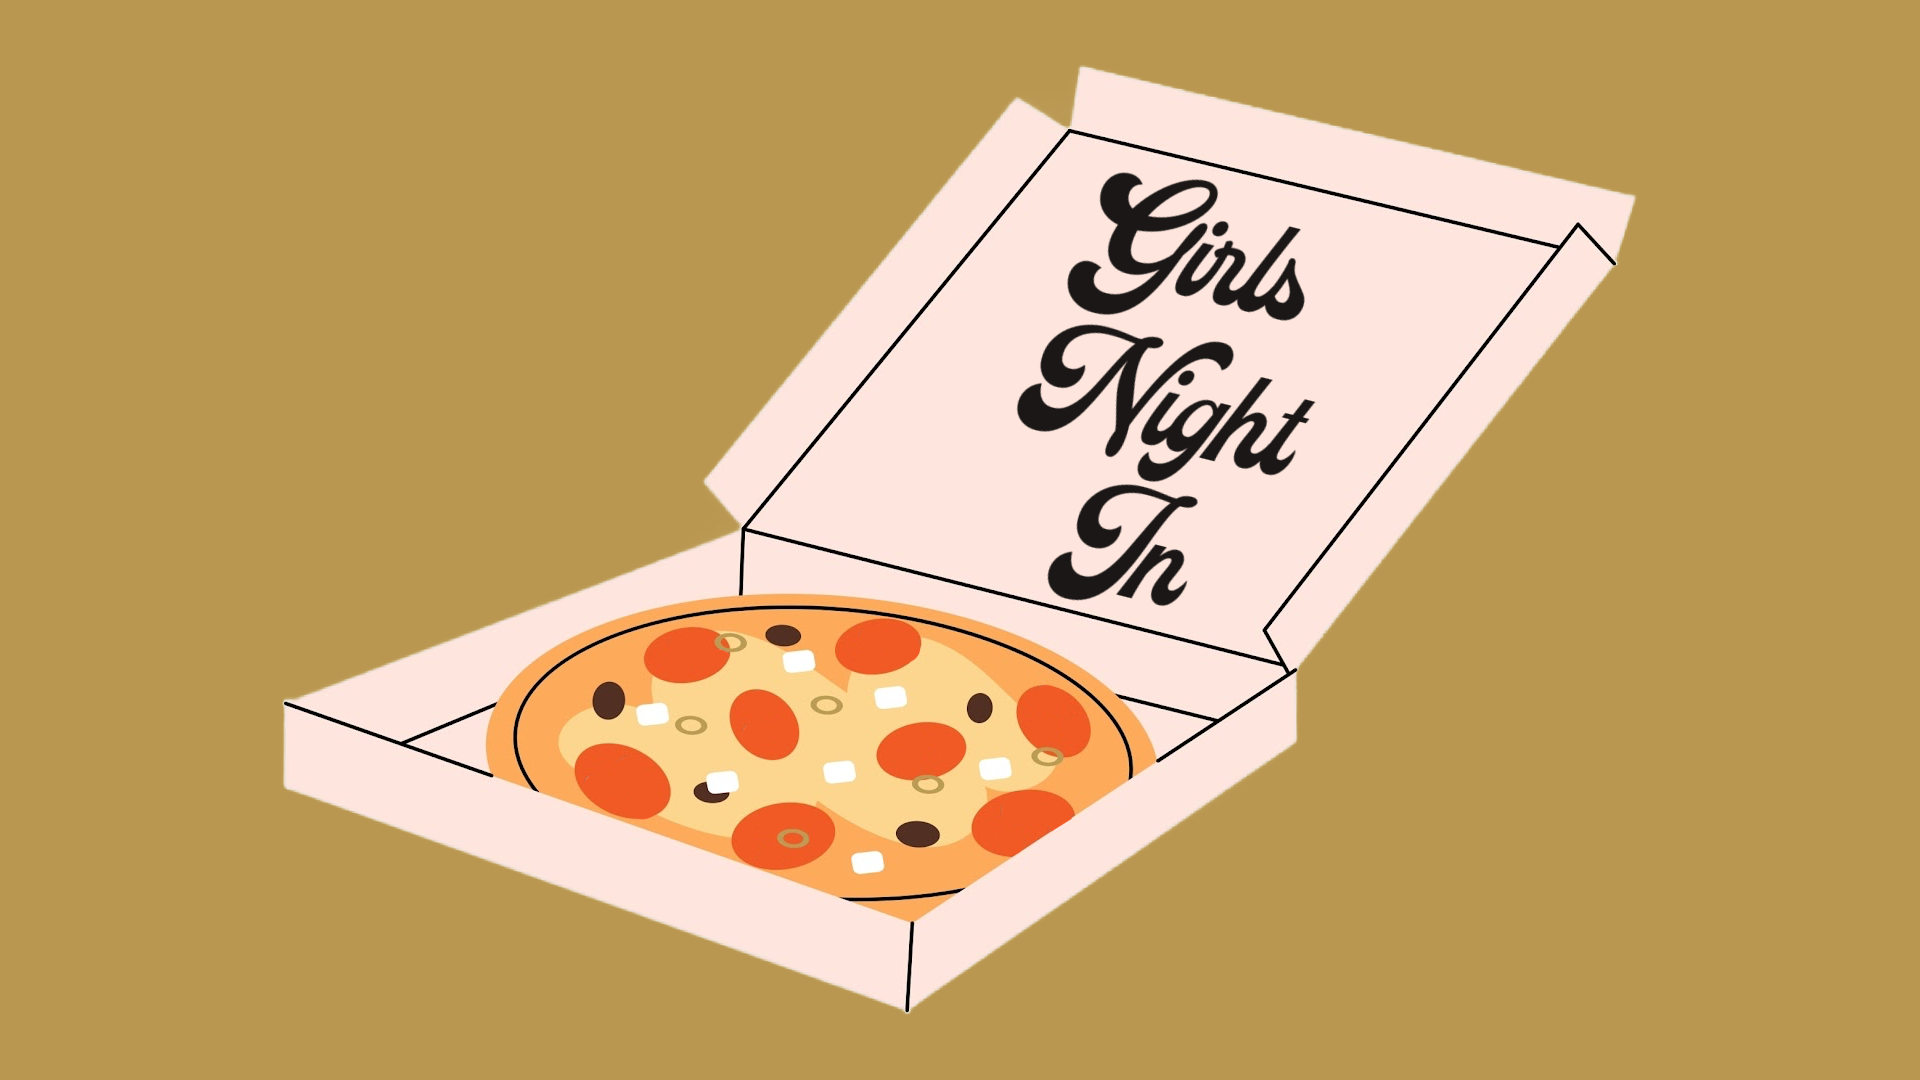 GH Women - Girls' Night In | May 1